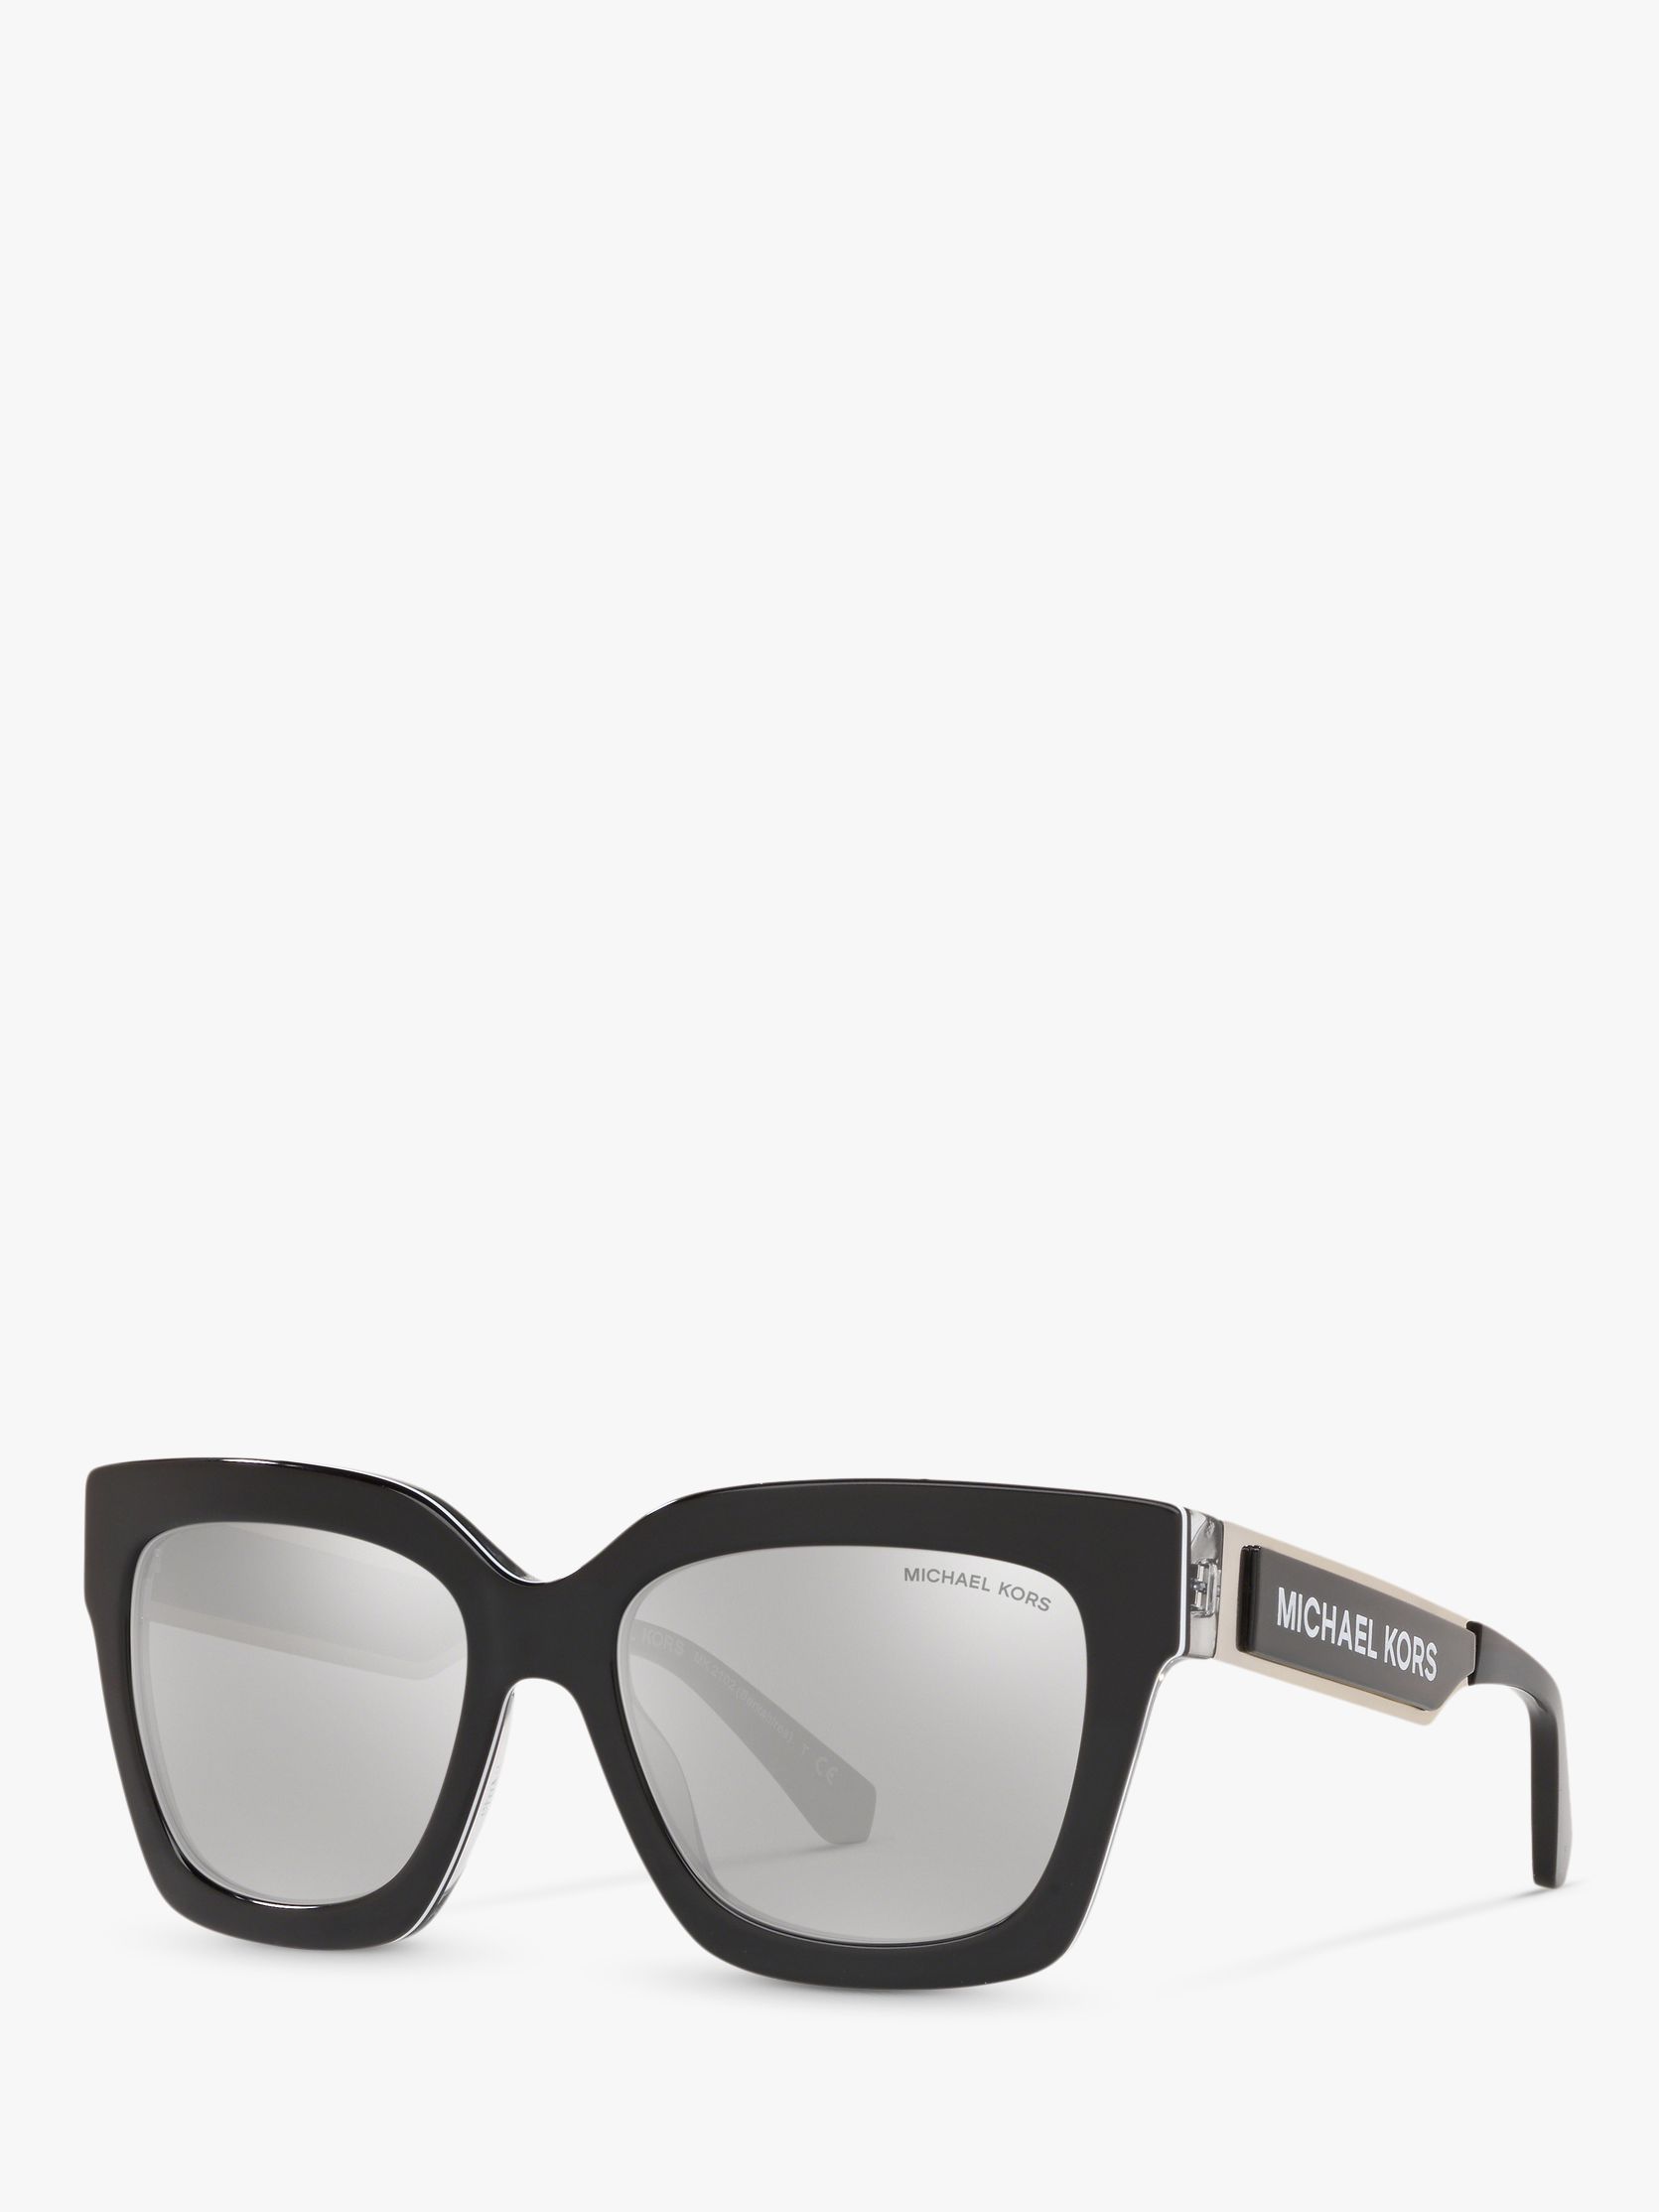 Michael Kors MK2102 Women's Berkshires Square Sunglasses